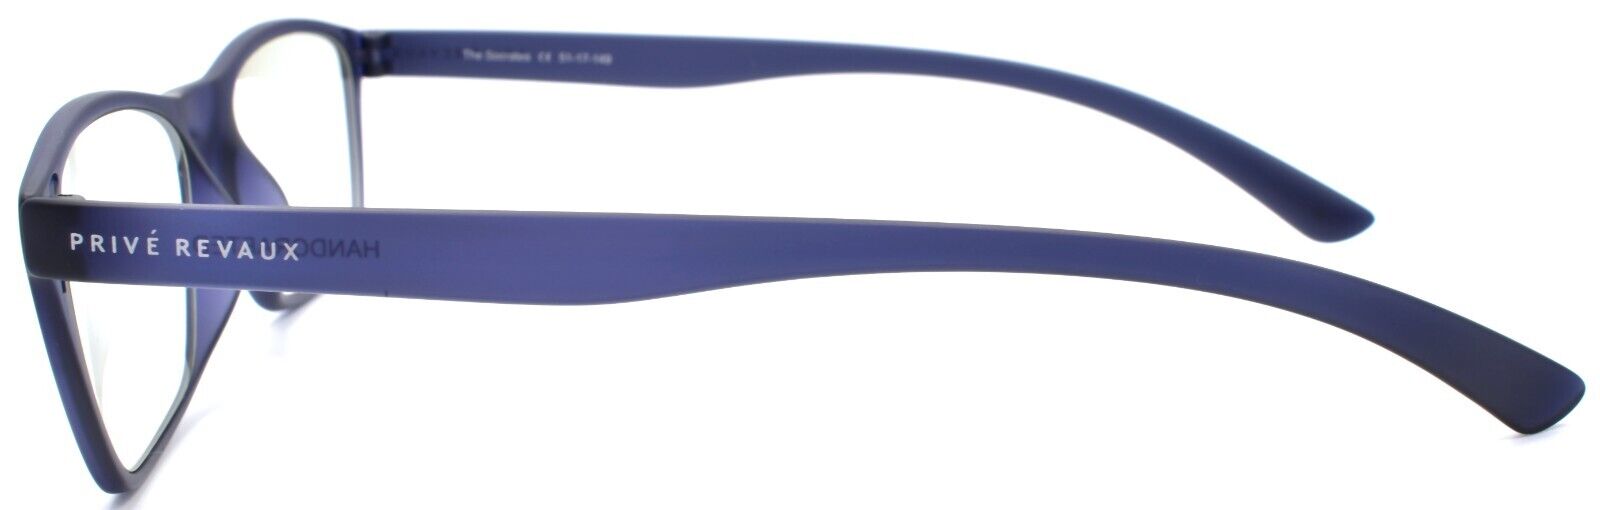 3-Prive Revaux The Socrates Eyeglasses Blue Light Blocking Lightweight Royal Blue-818893022951-IKSpecs